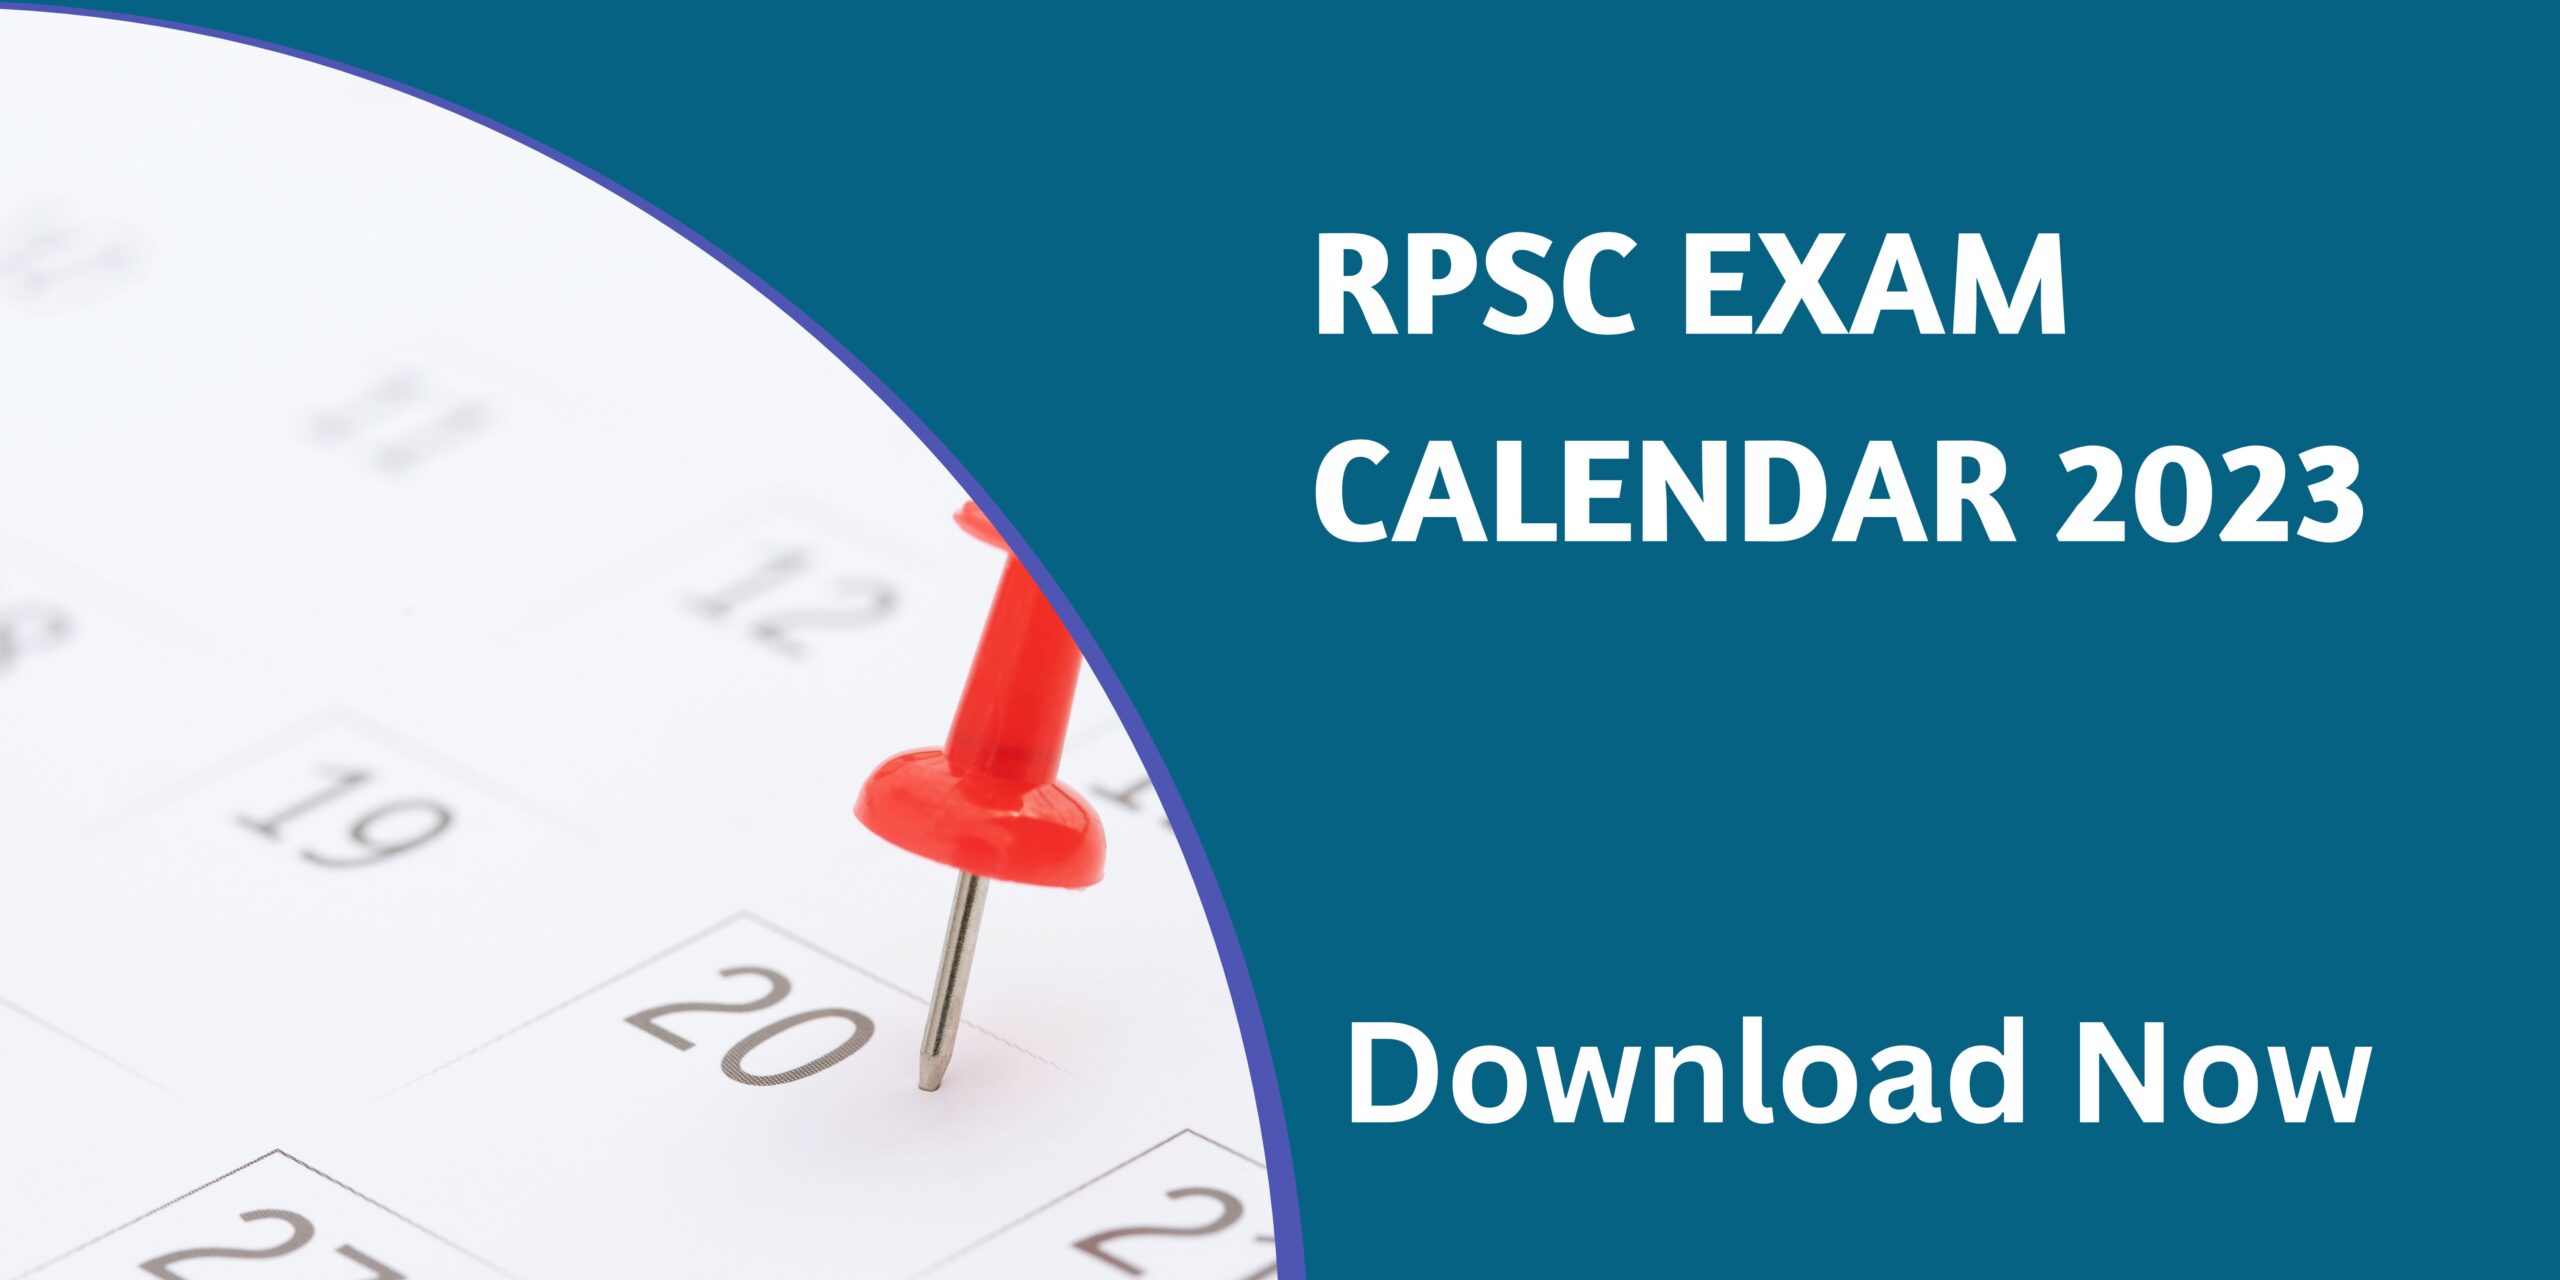 RPSC Exam Calendar 2023 last date